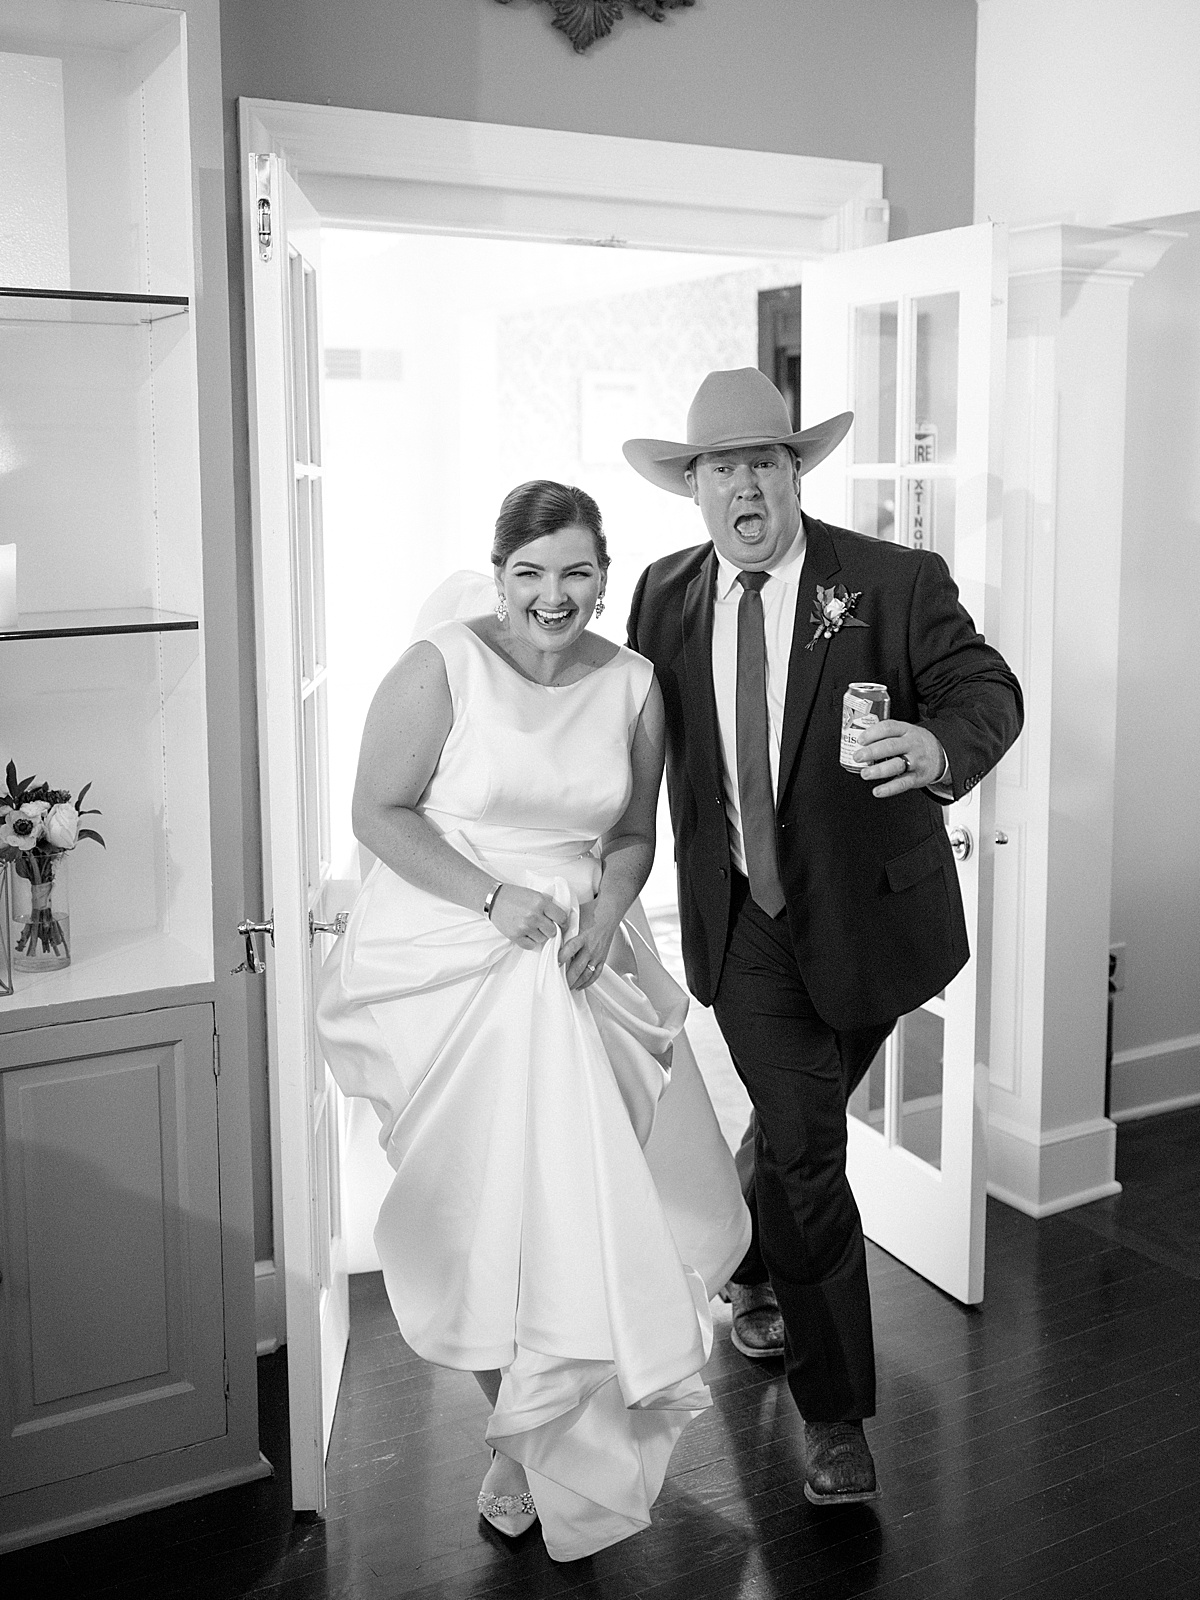 Executive Hills Polo Club,Fall Wedding Inspiration,Kansas City Wedding,Kansas City Wedding Photographer,